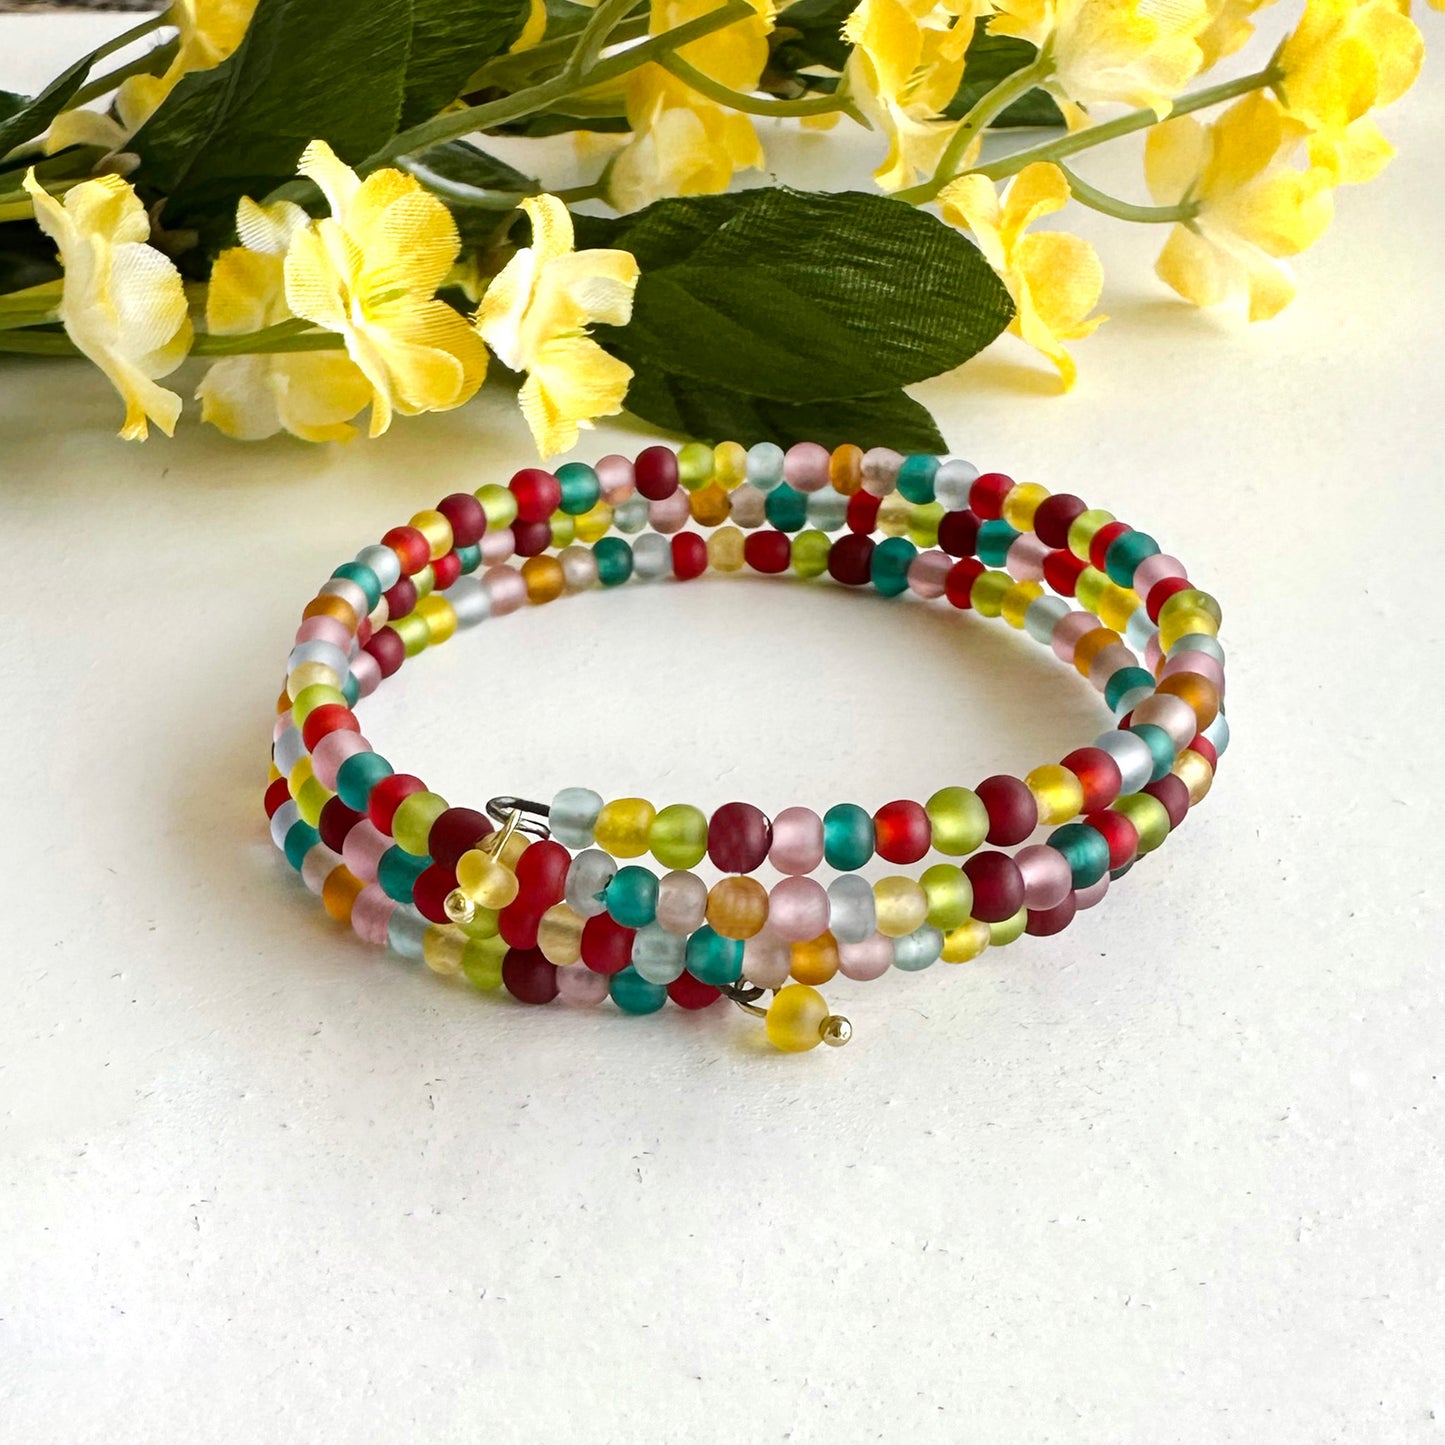 Spiral Bracelet 3 Rhg With Pearls 0.8oz / Ca.ø 2in | eBay